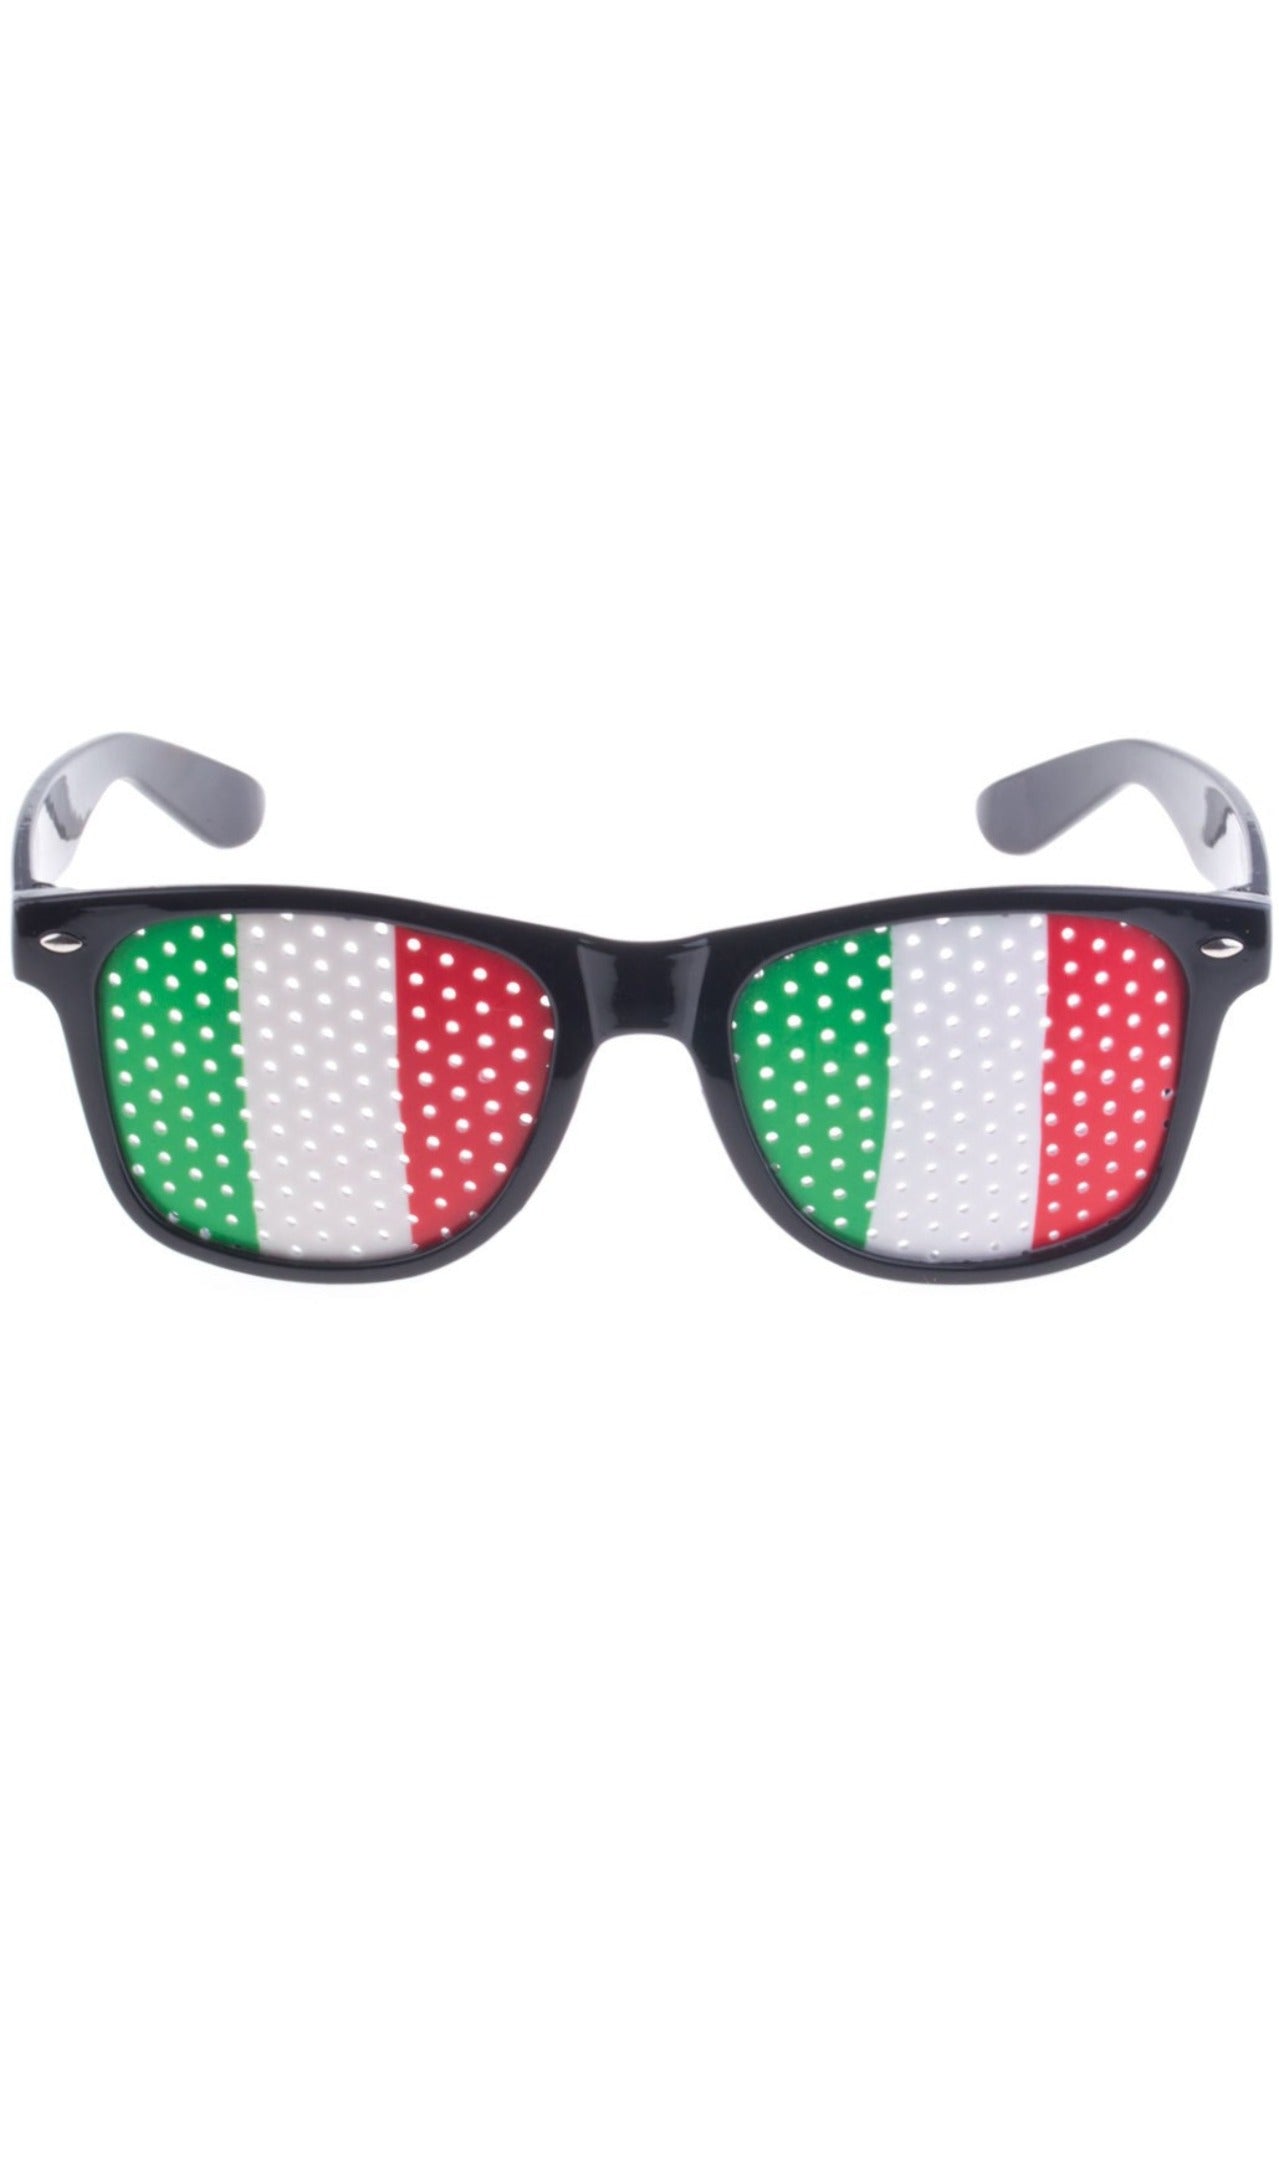 Brille Flagge Italien